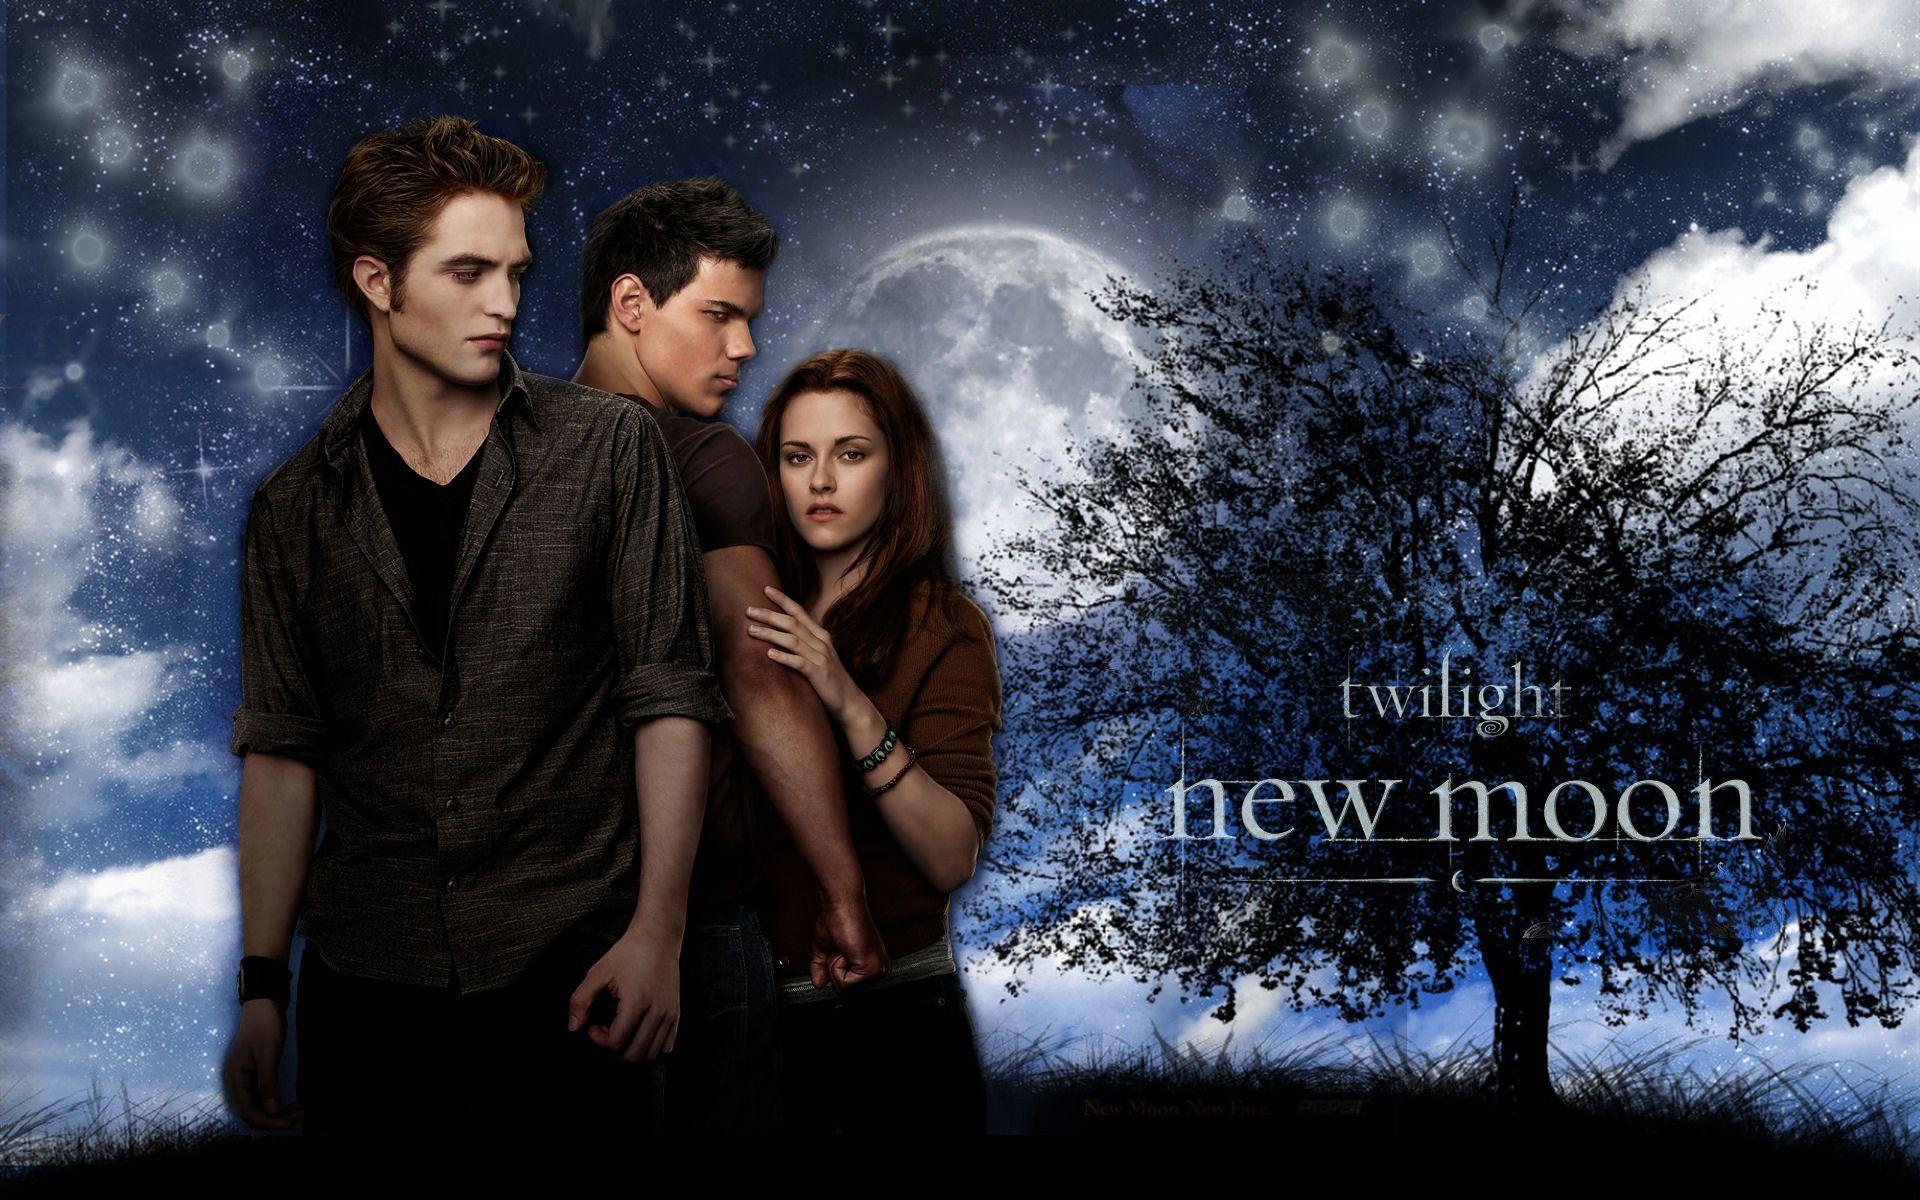 série crepúsculo imagens The Twilight Saga New Moon HD wallpaper